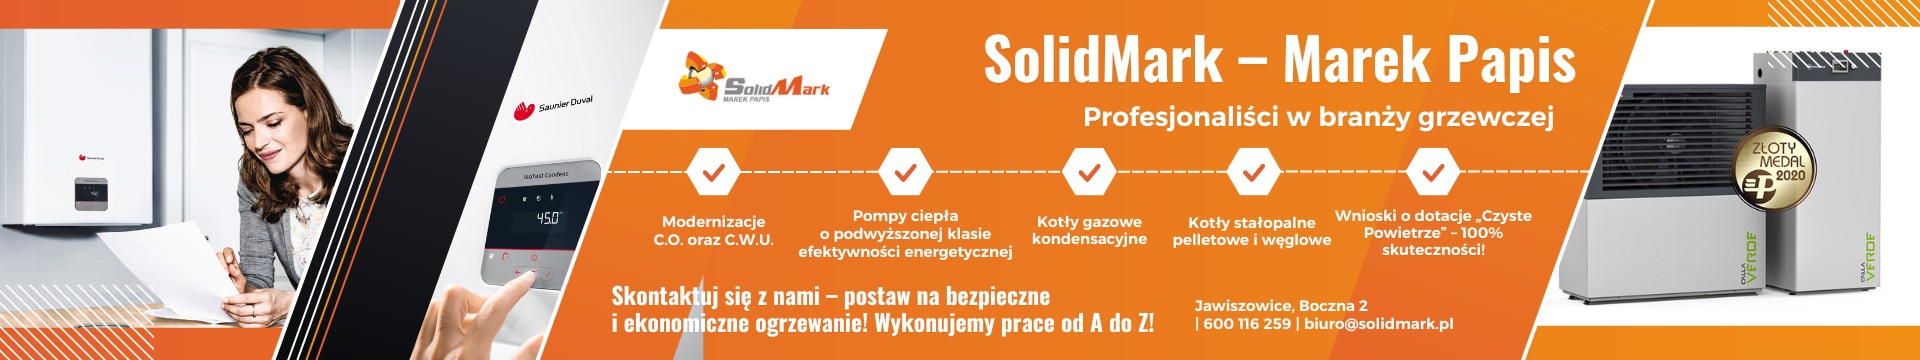 SolidMark